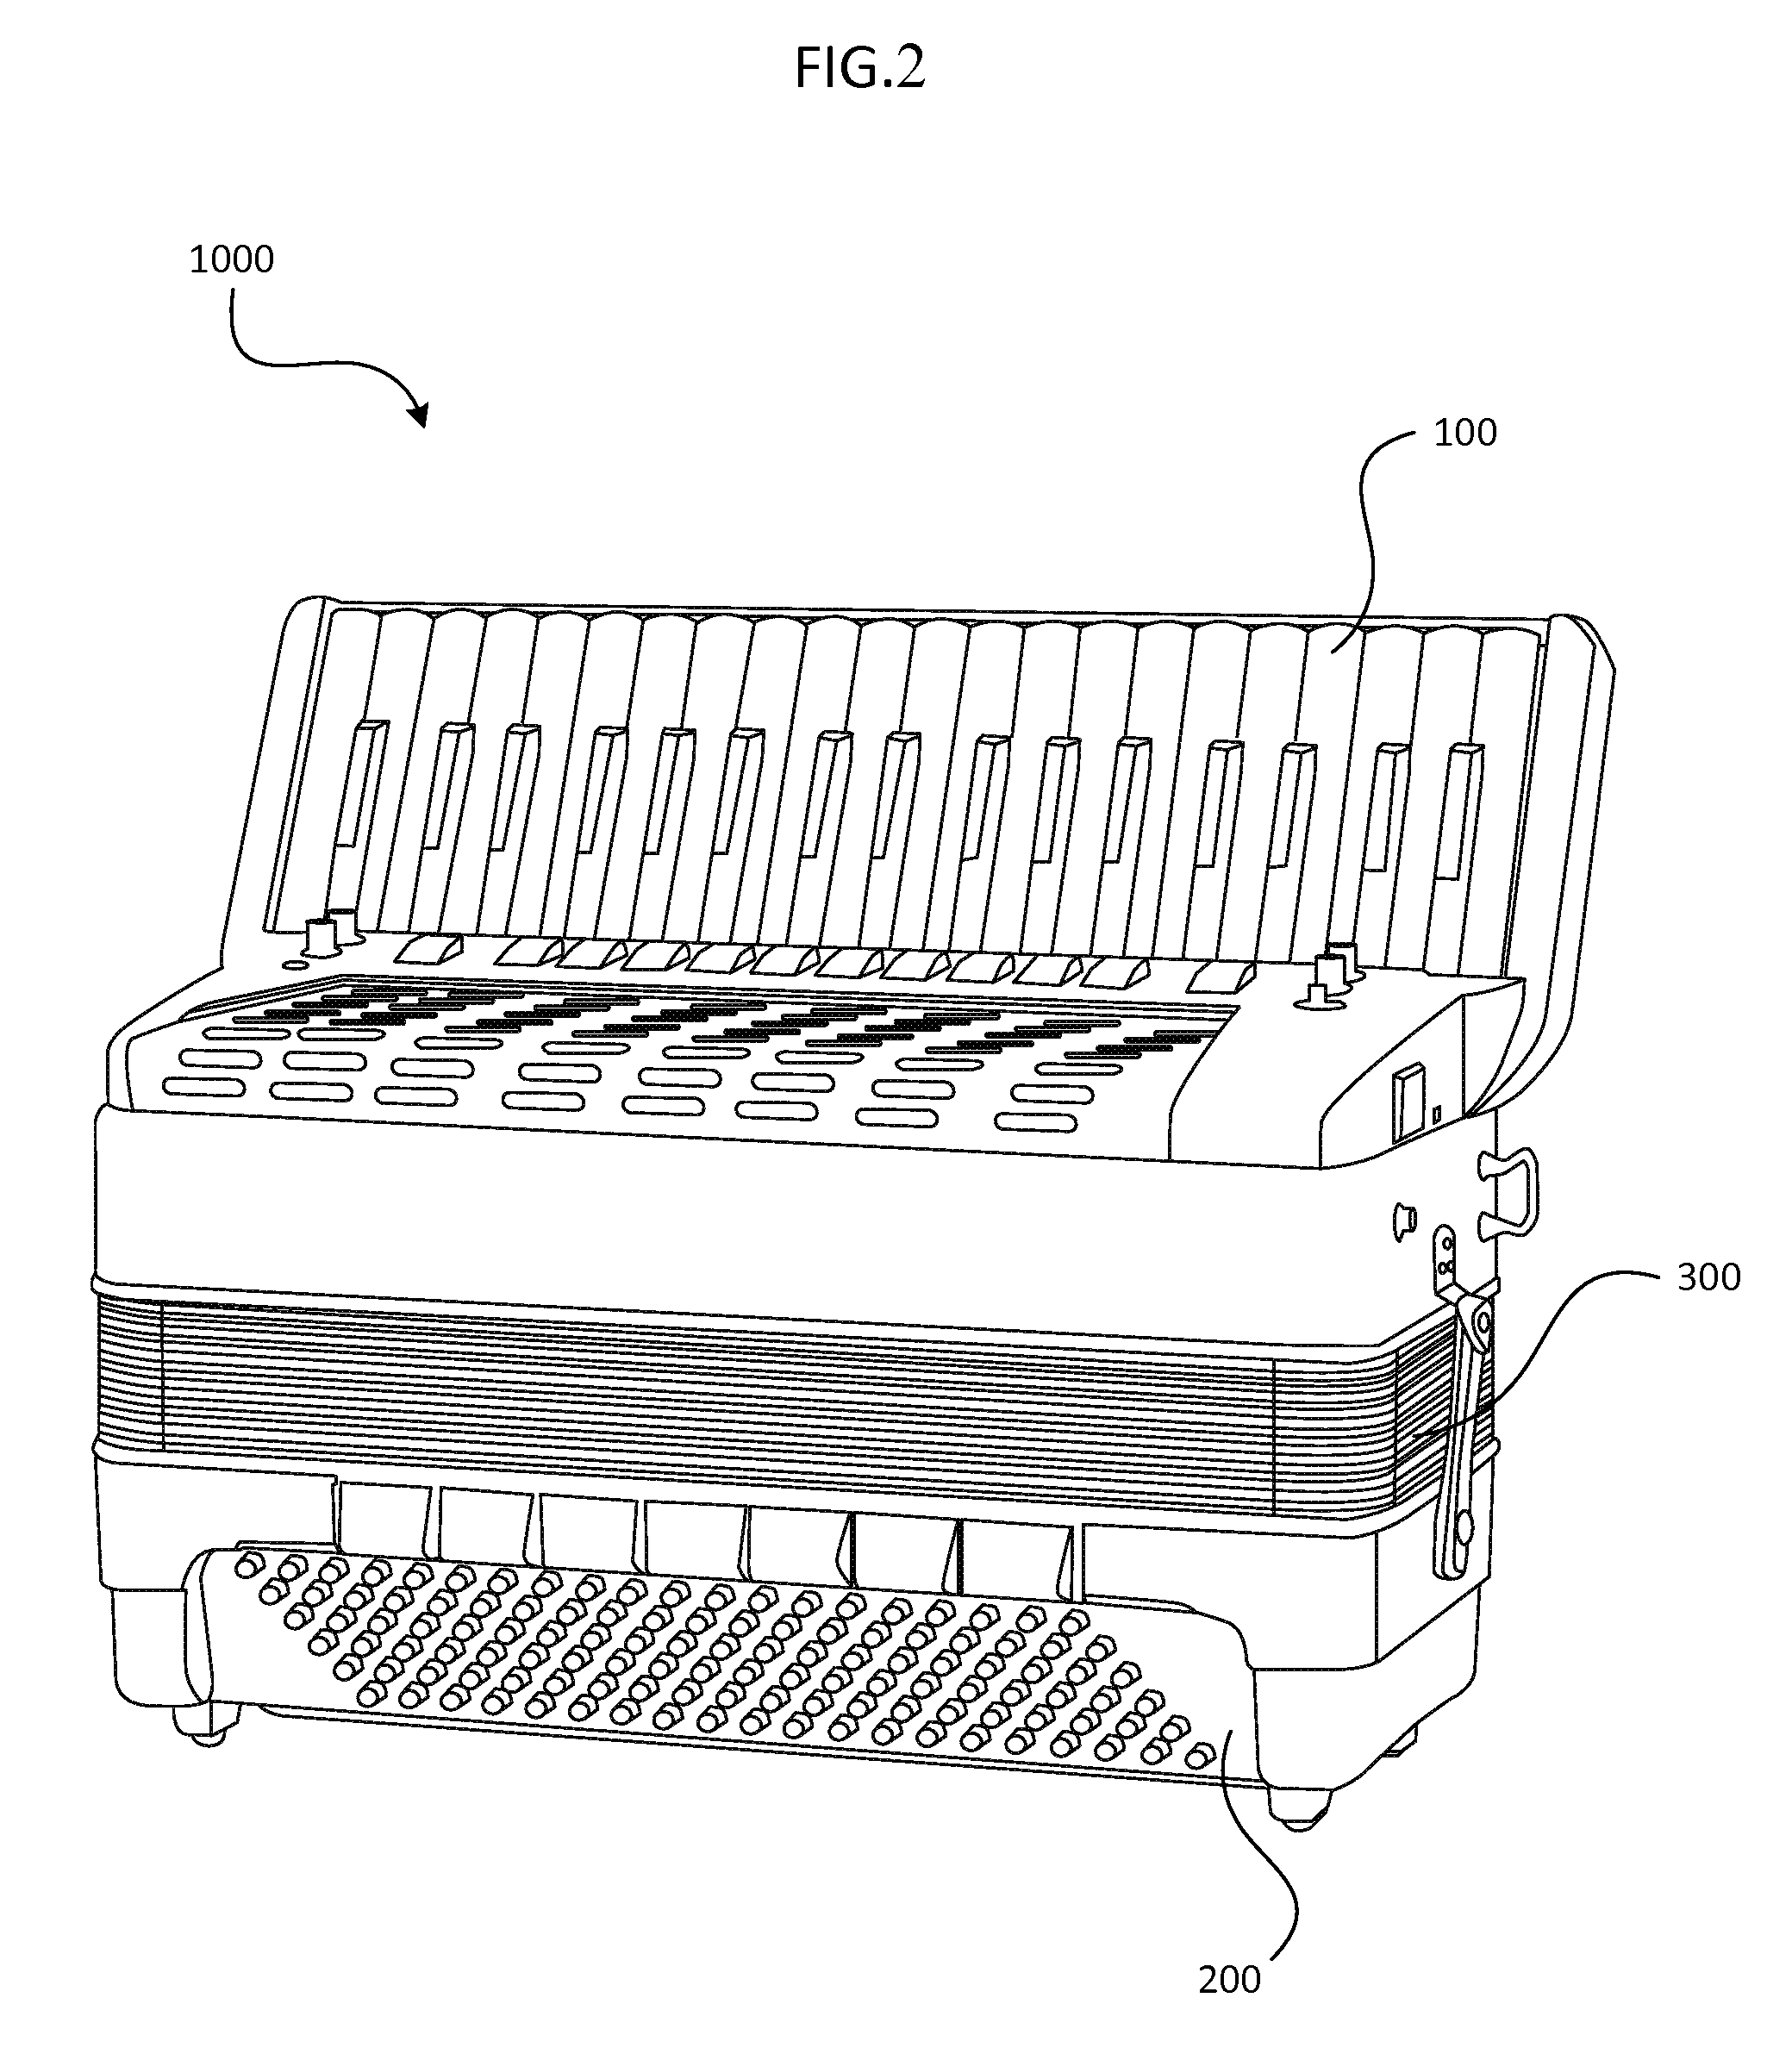 Accordion, electronic accordion, and computer program product